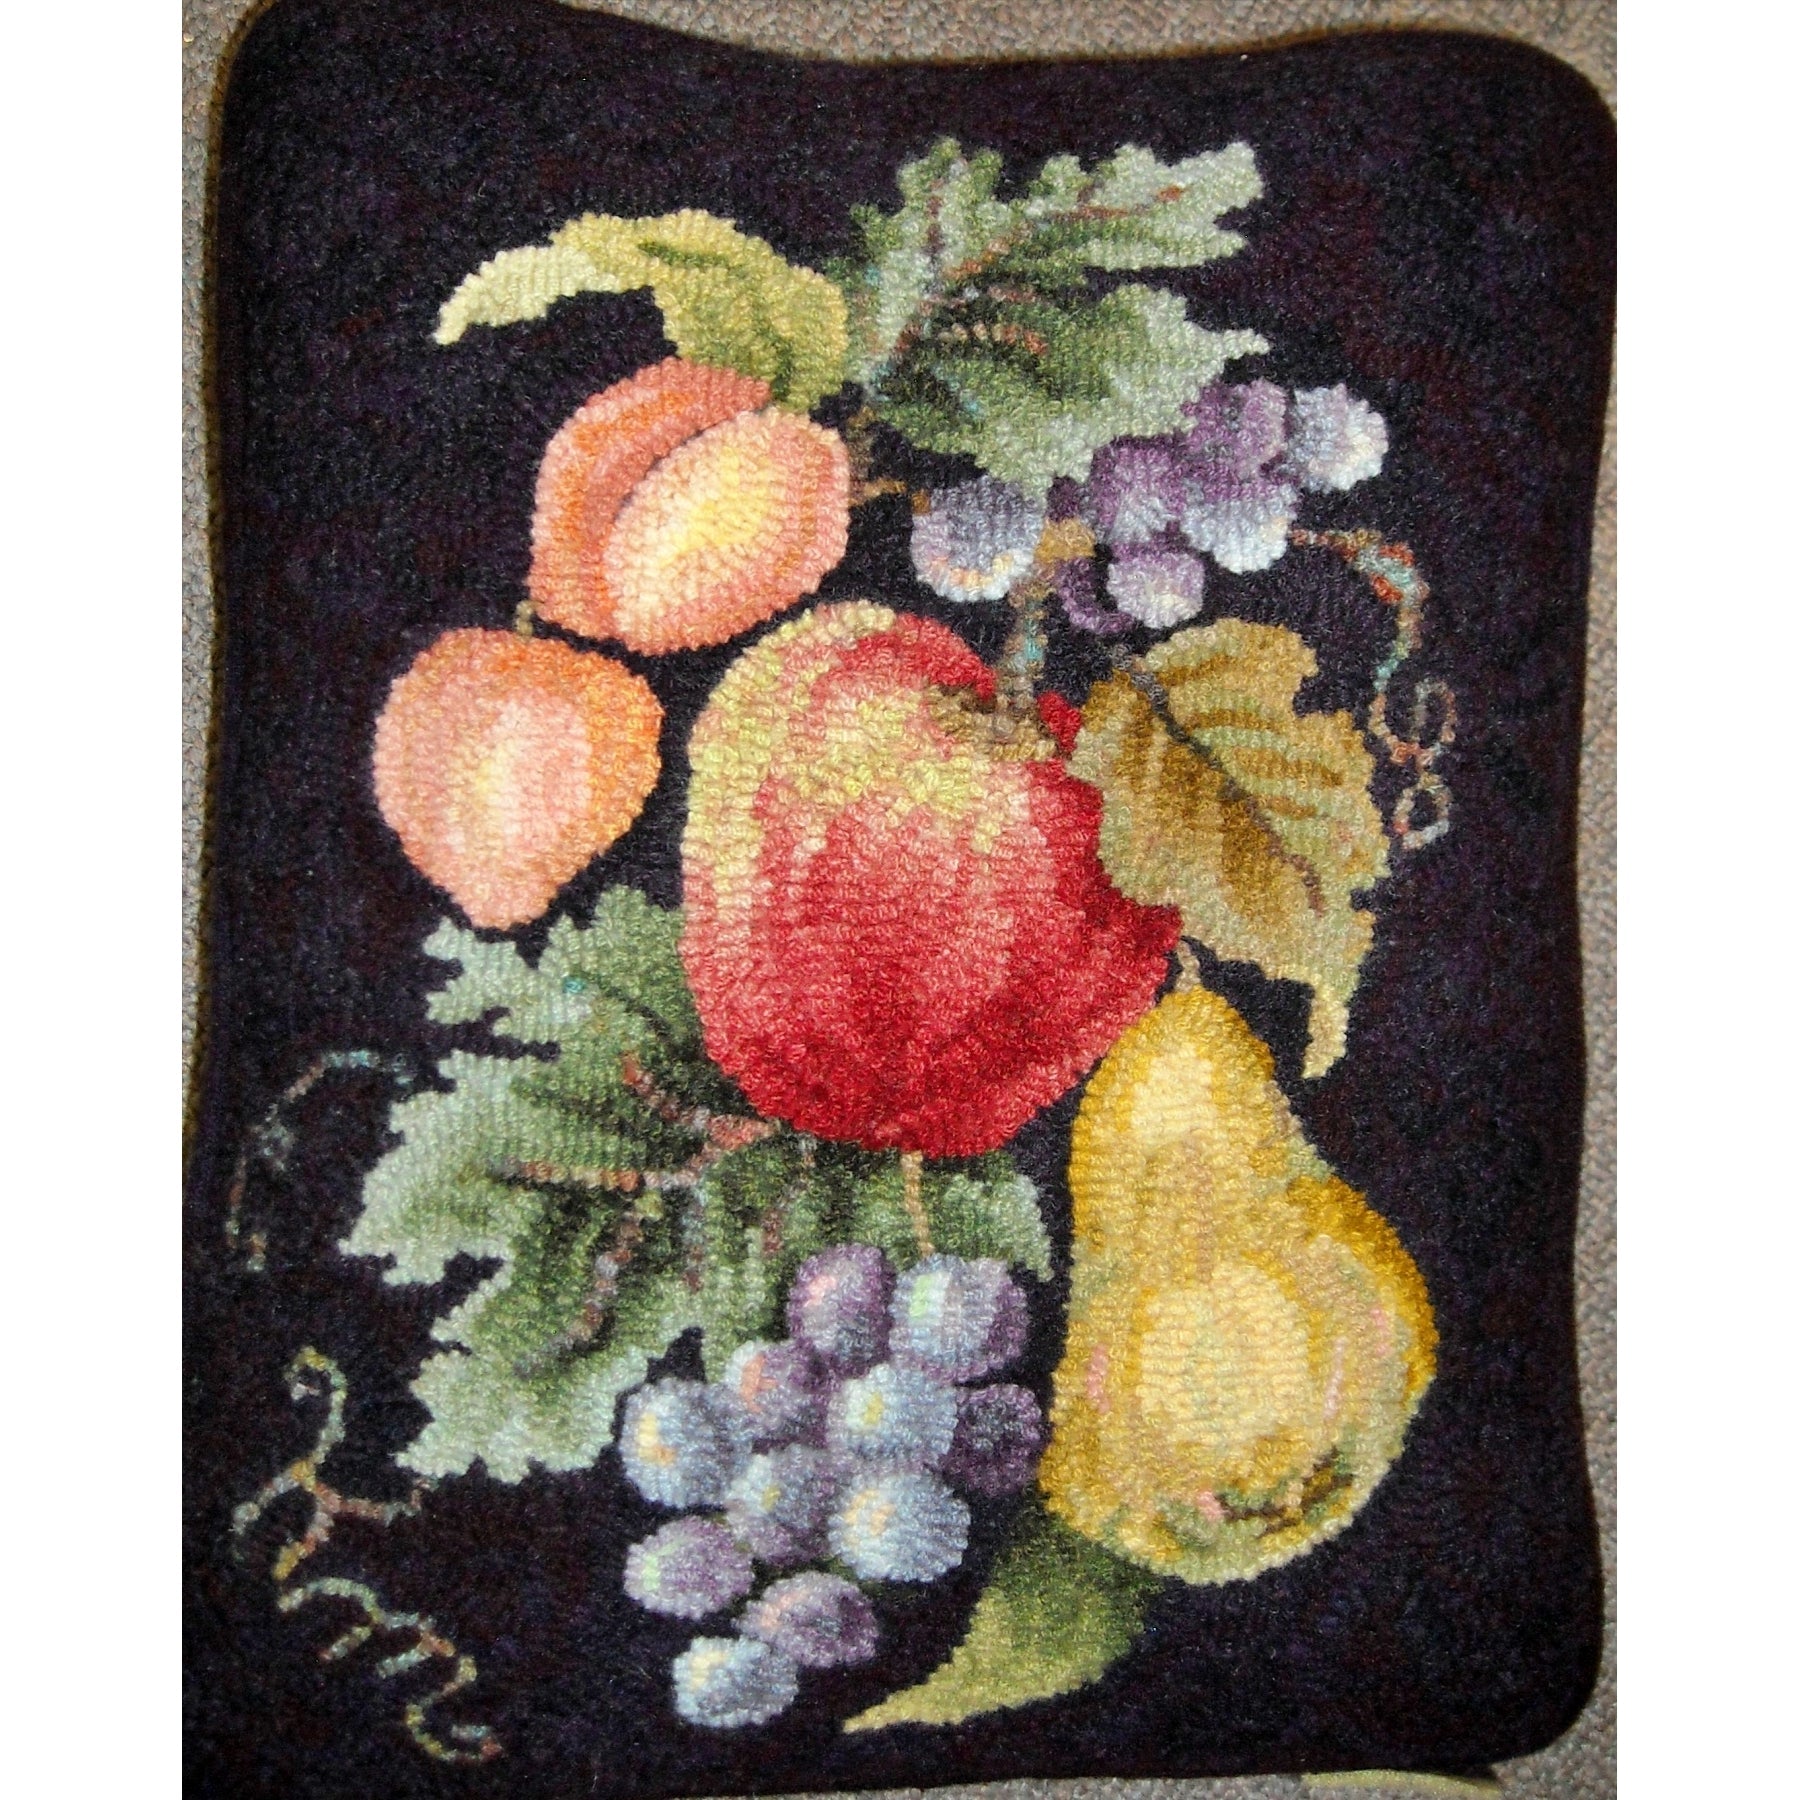 Fruit, rug hooked by Kathie Meyers